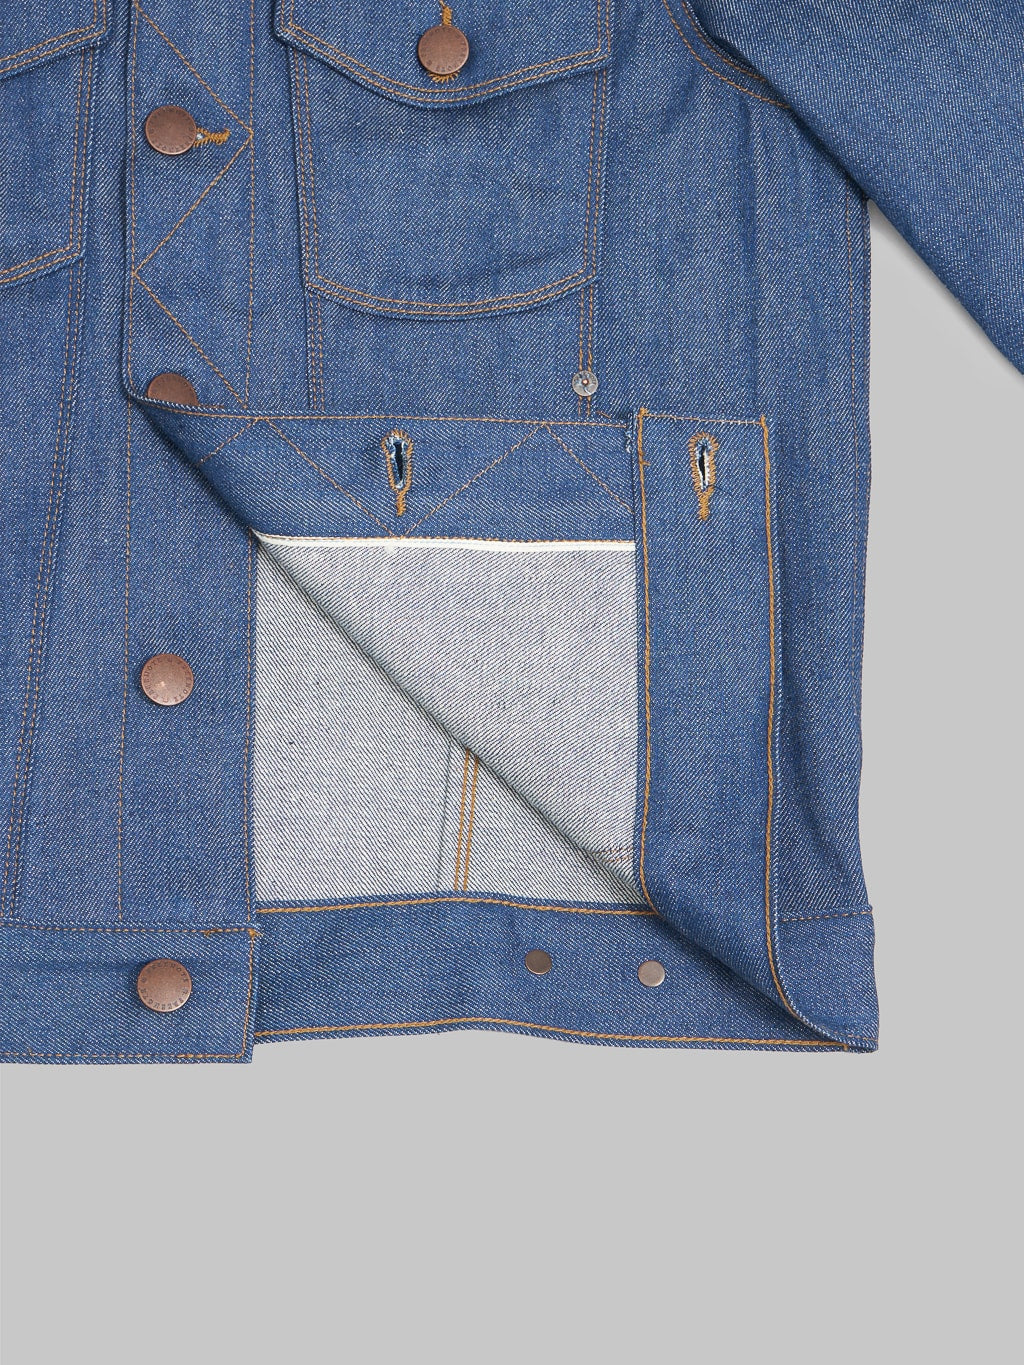 freenote cloth classic denim jacket vintage blue denim interior weft